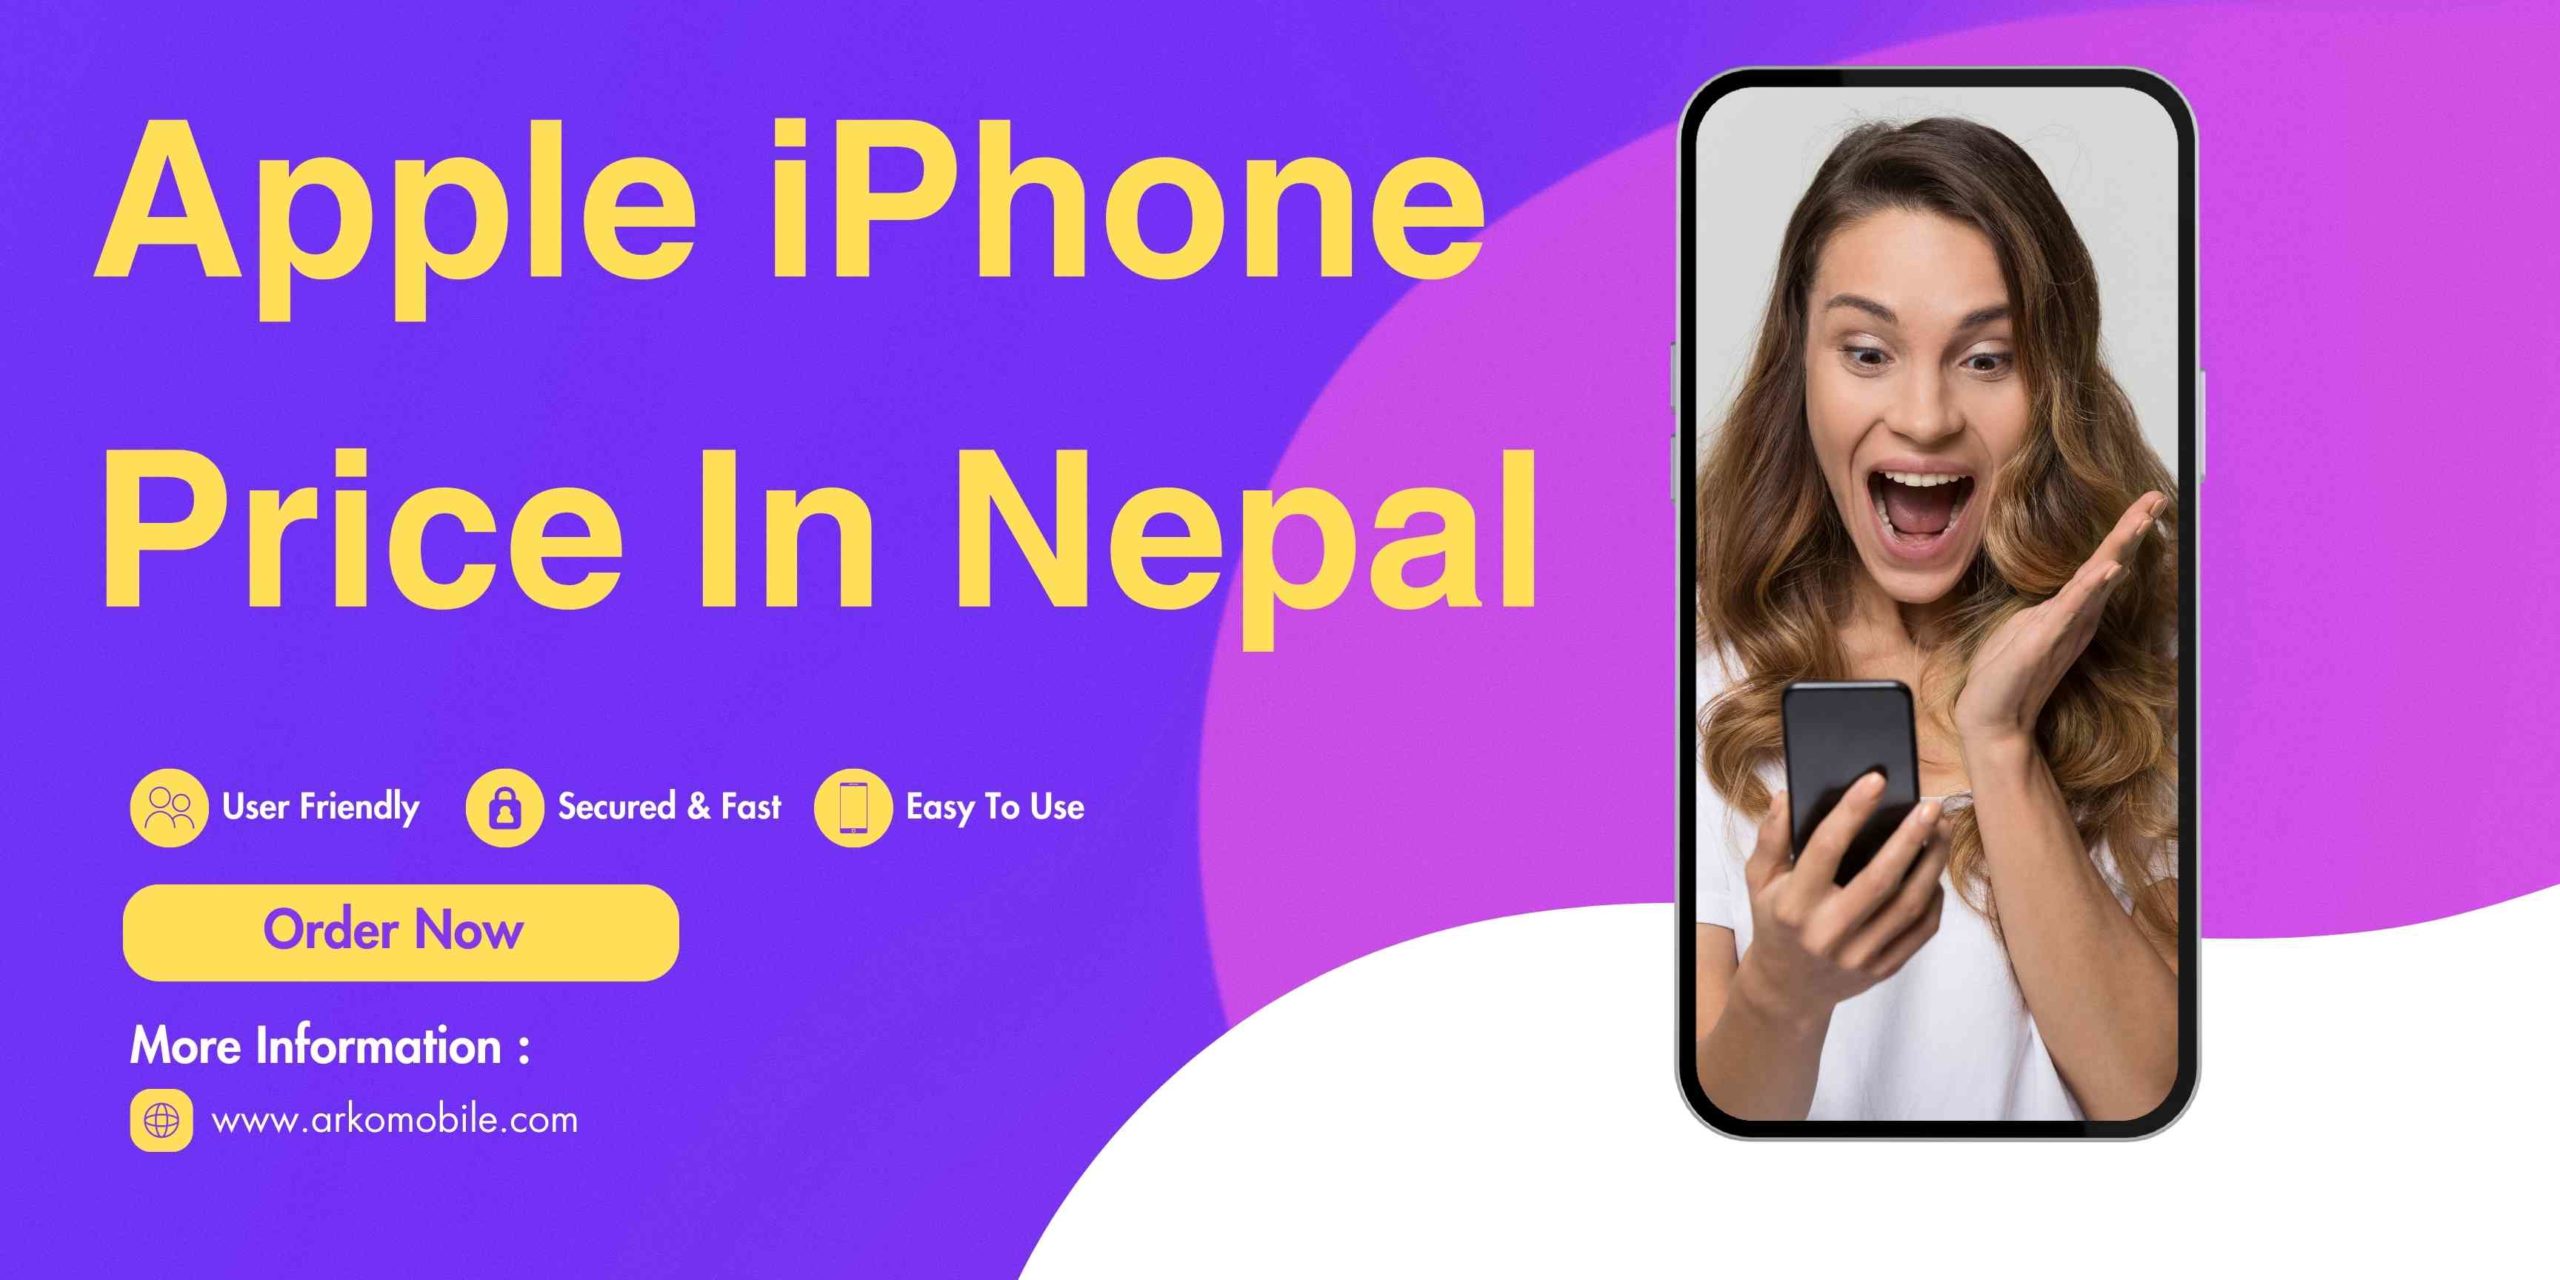 Apple iPhone Price in Nepal? Arko Mobile